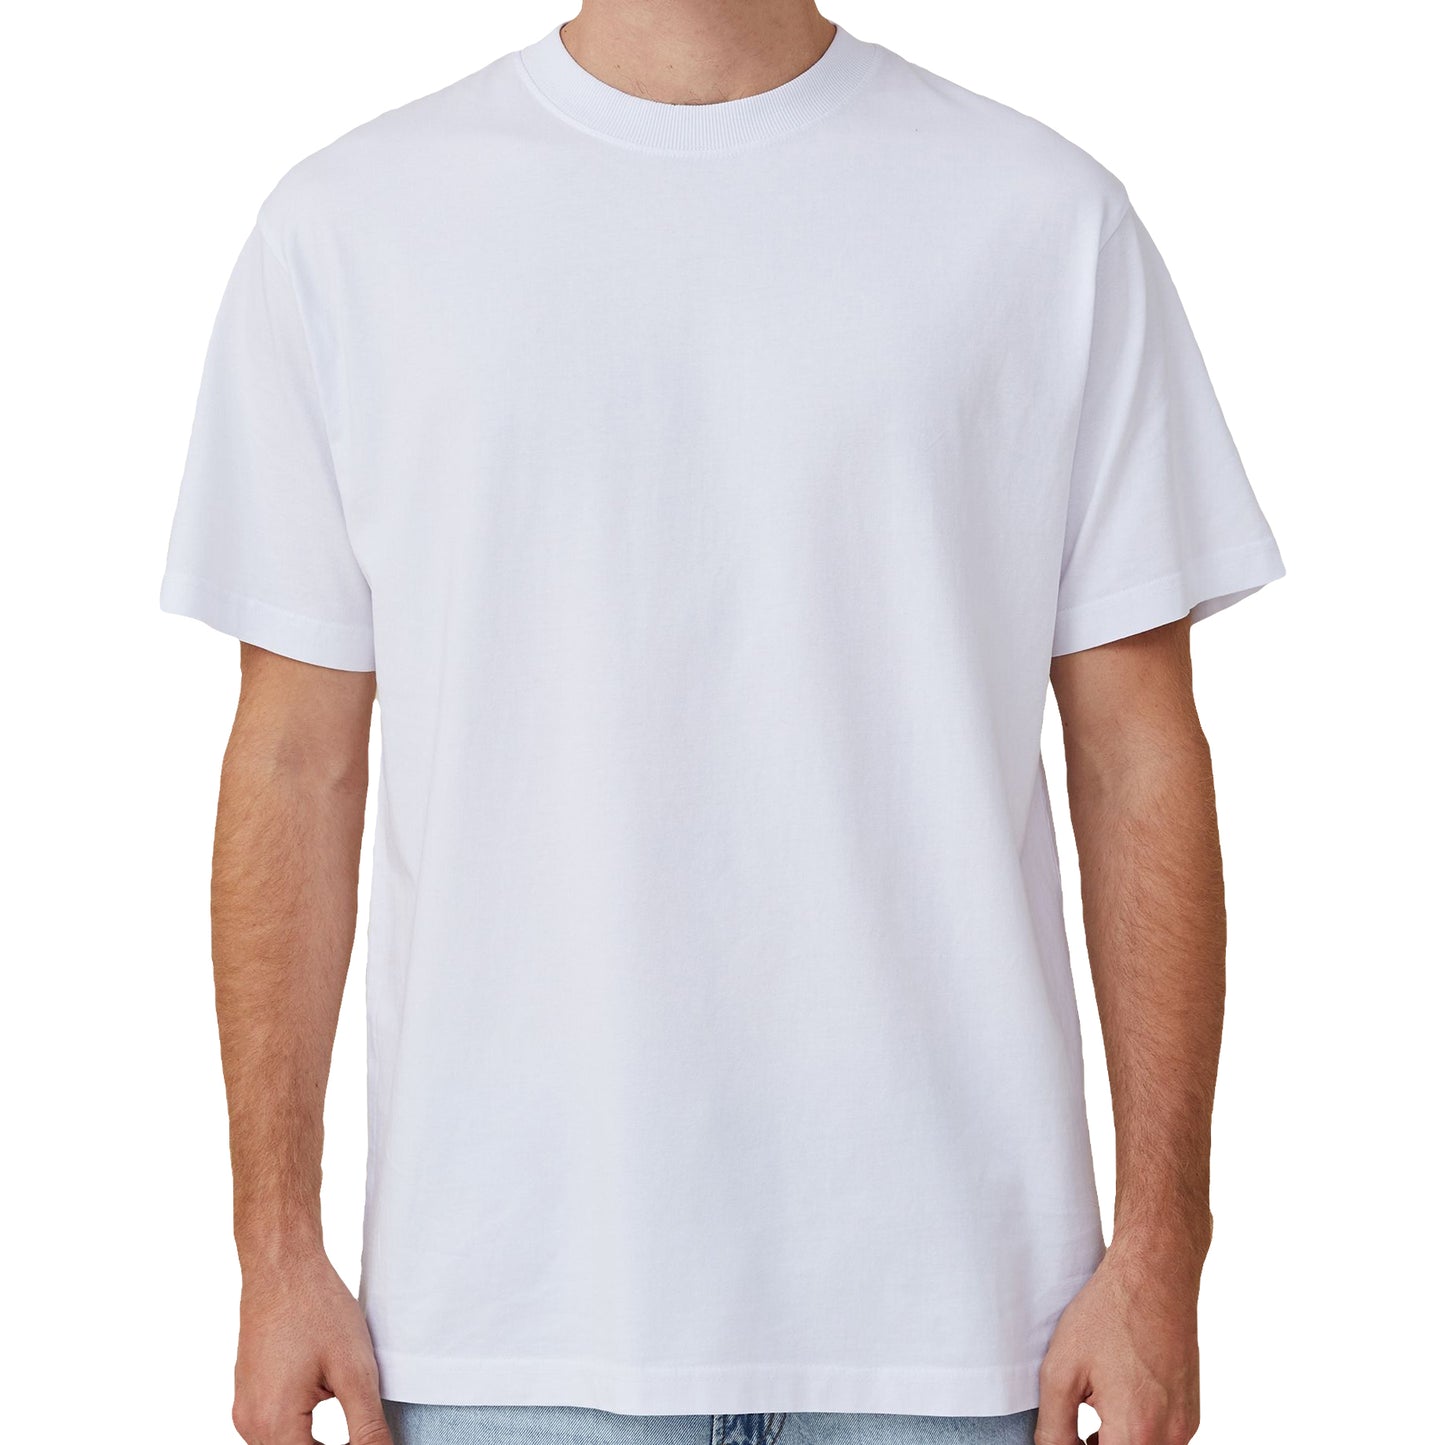 Adult 100% Cotton T-Shirt Unisex Men's Basic Plain Blank Crew Tee Tops Shirts, Royal Blue, 2XL